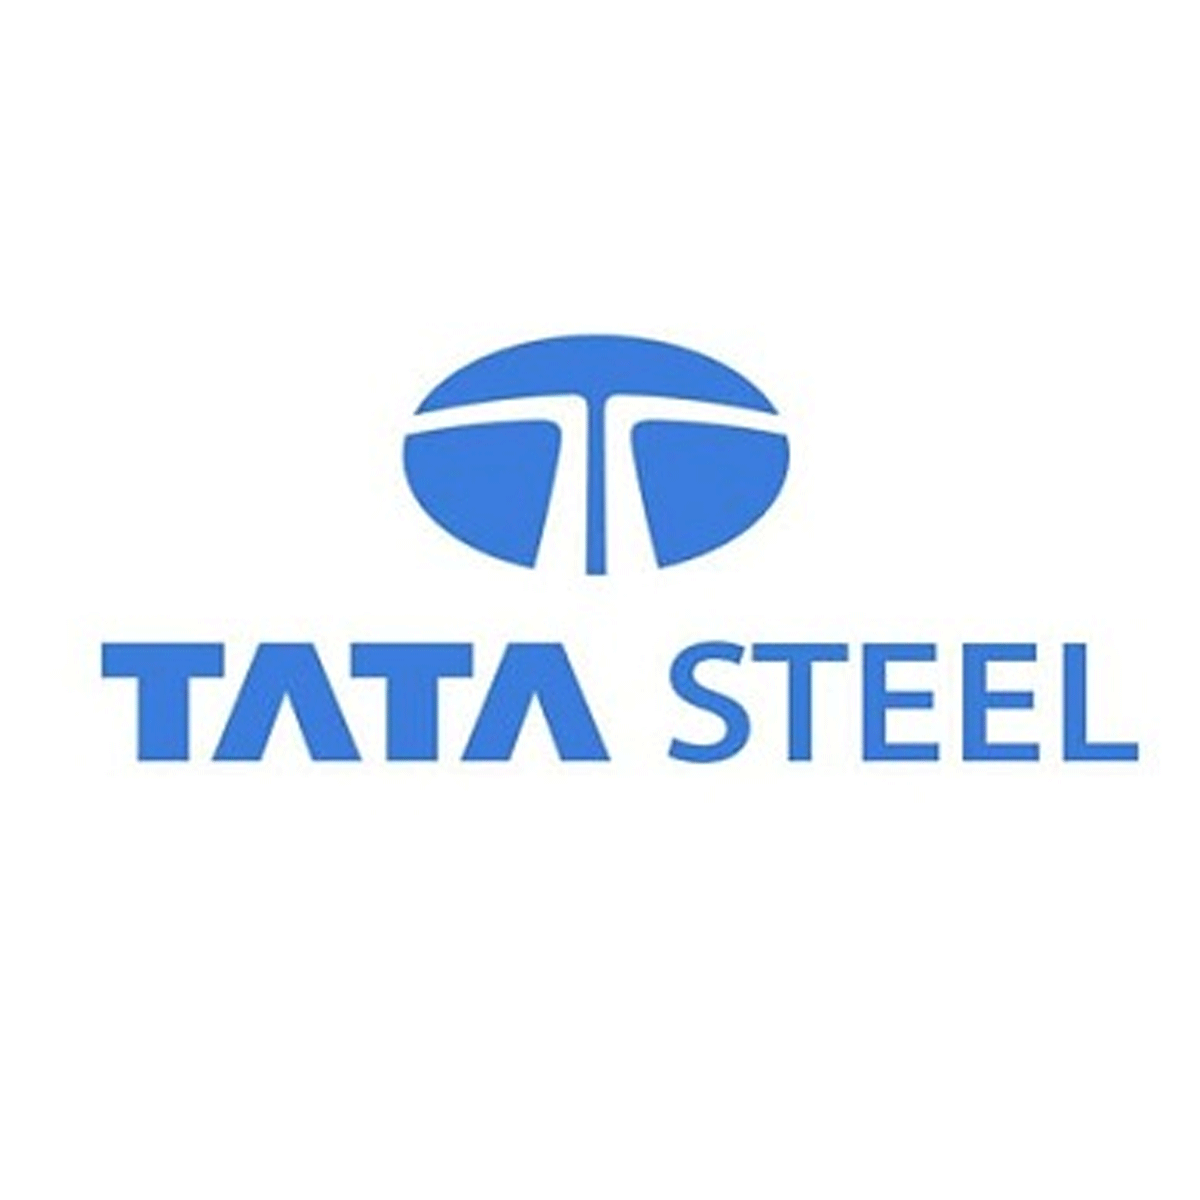 Tata Steel | Logos usage & guidelines